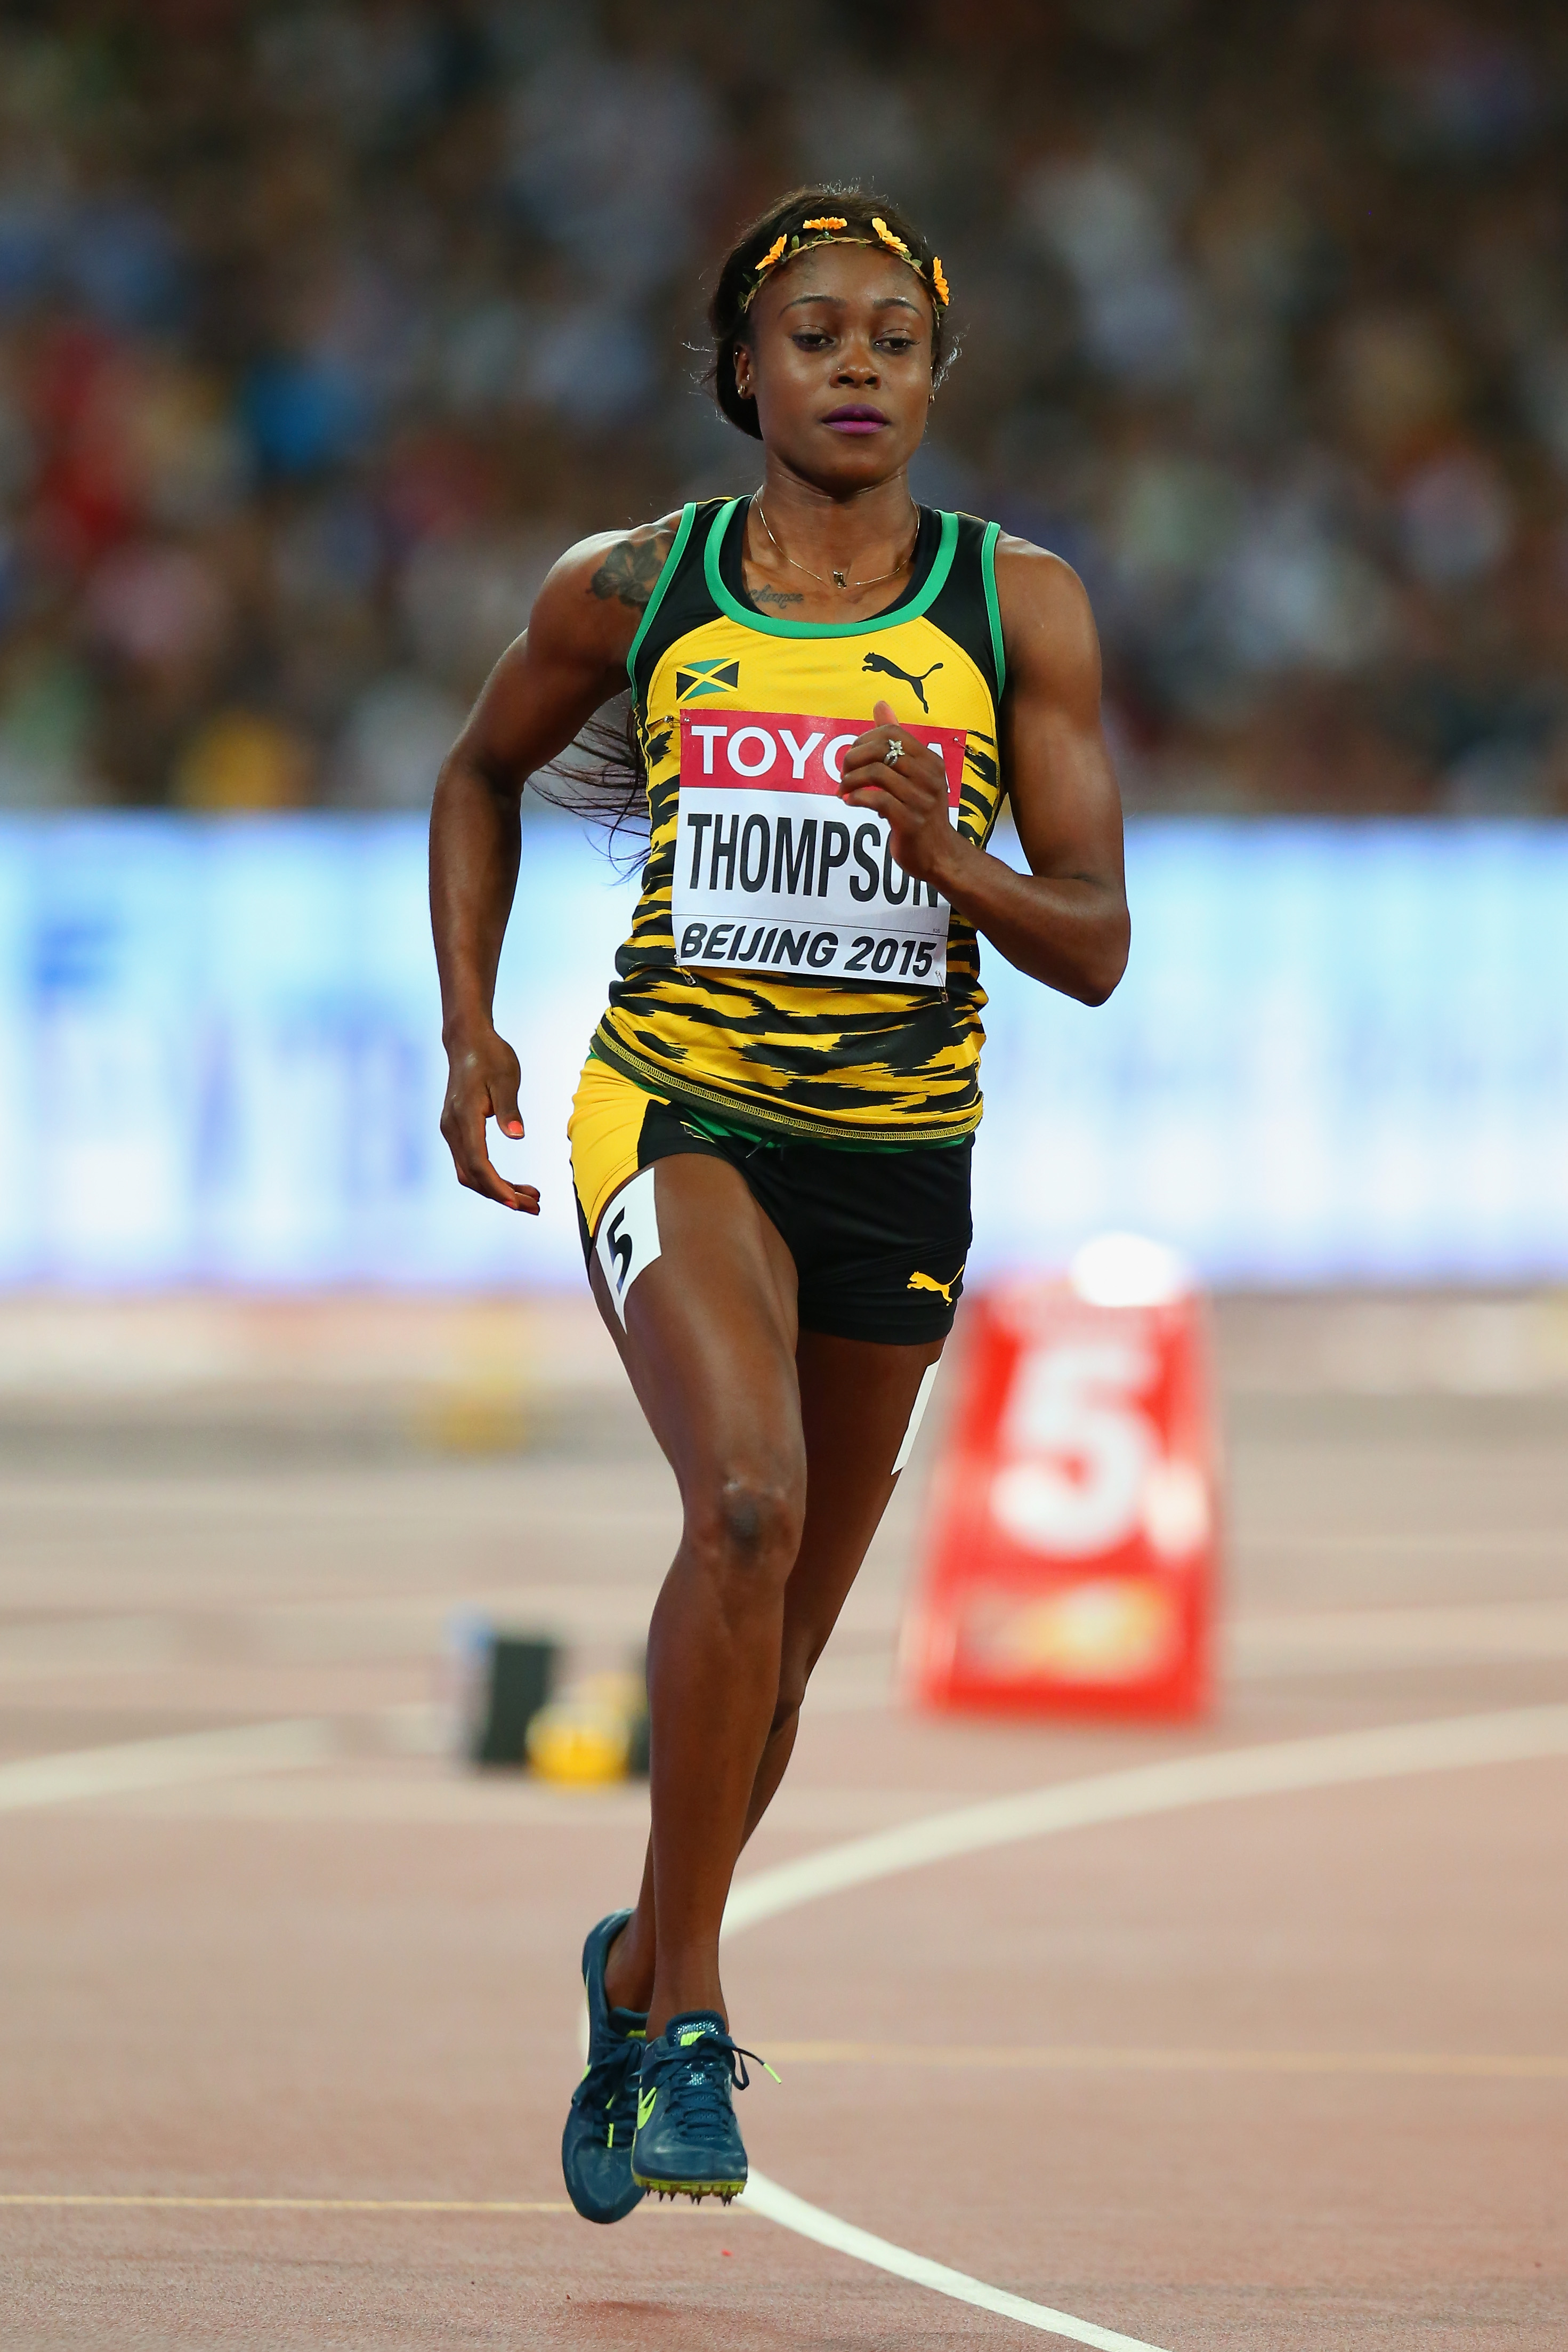 Thompson wins 100m crown #Rio2016